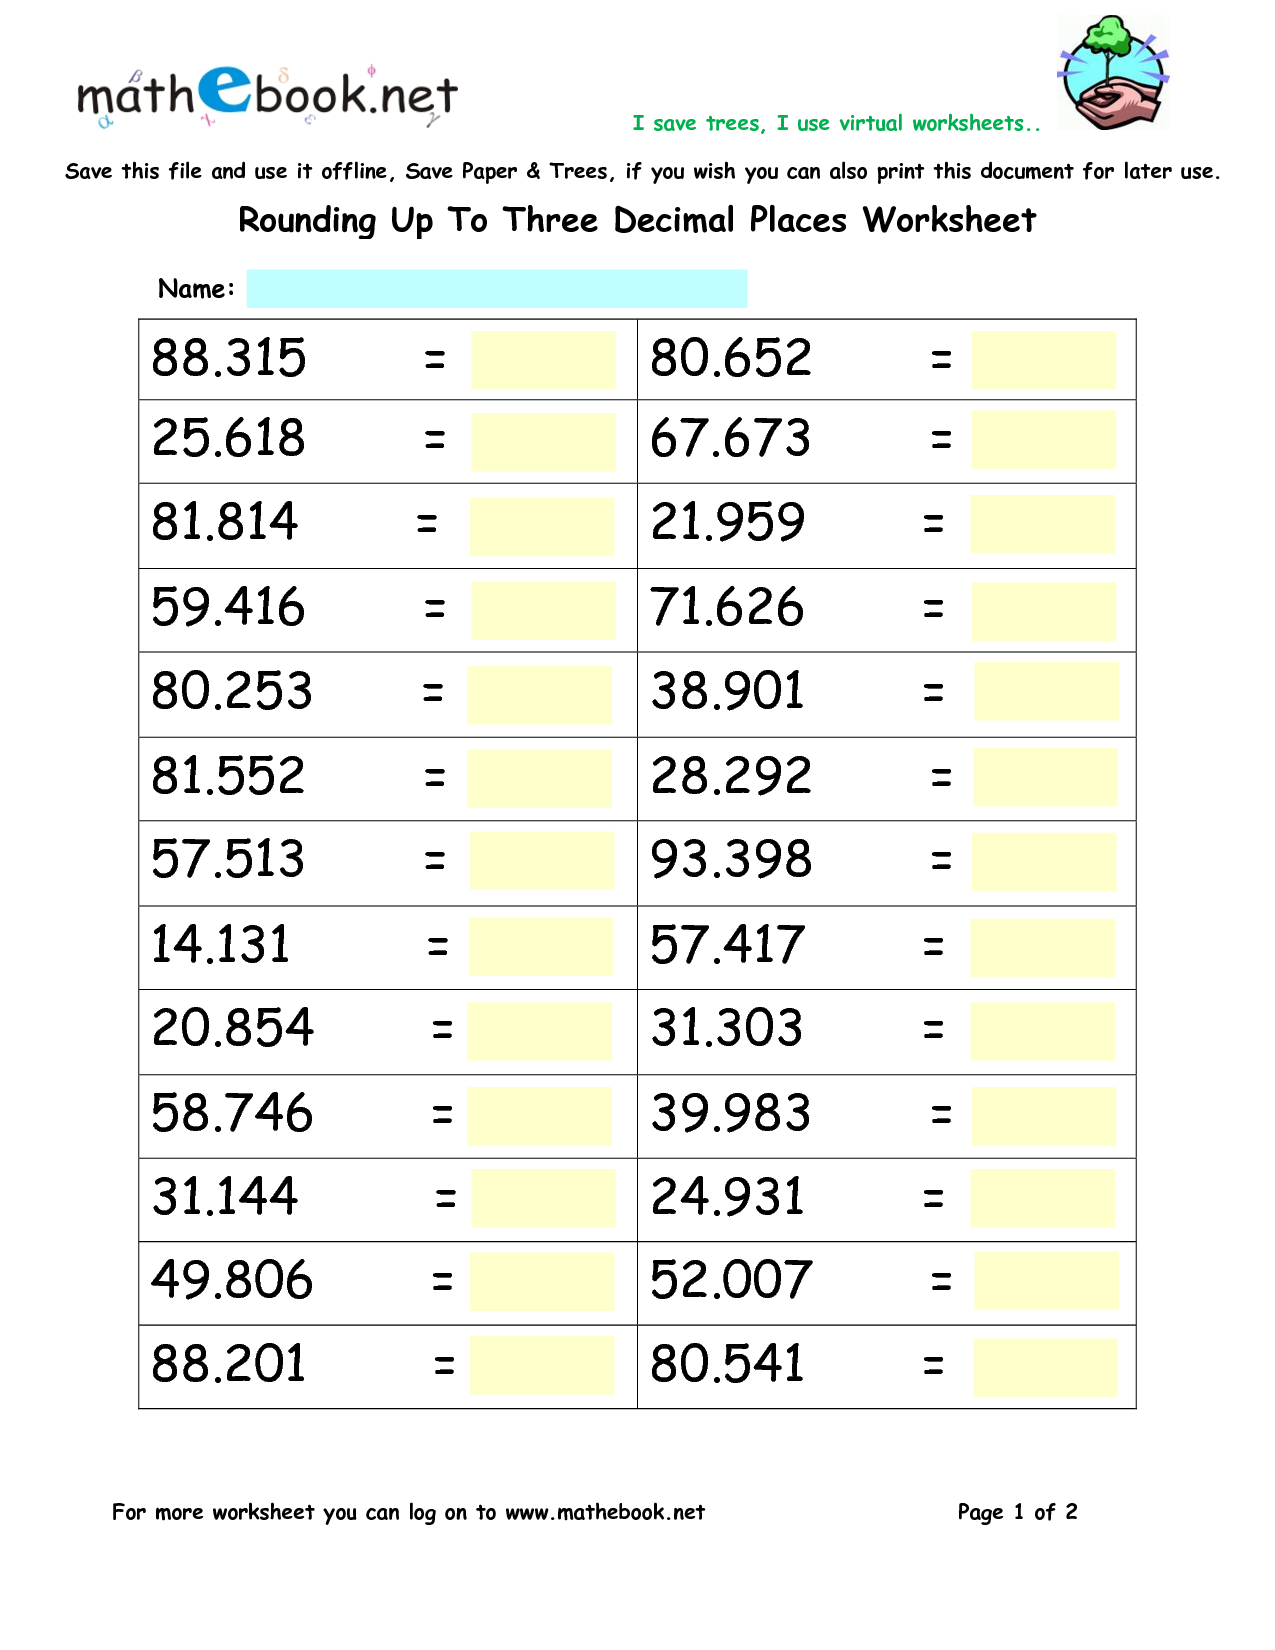 math-worksheets-rounding-decimals-831198-free-worksheets-samples-grade-4-maths-resources-34